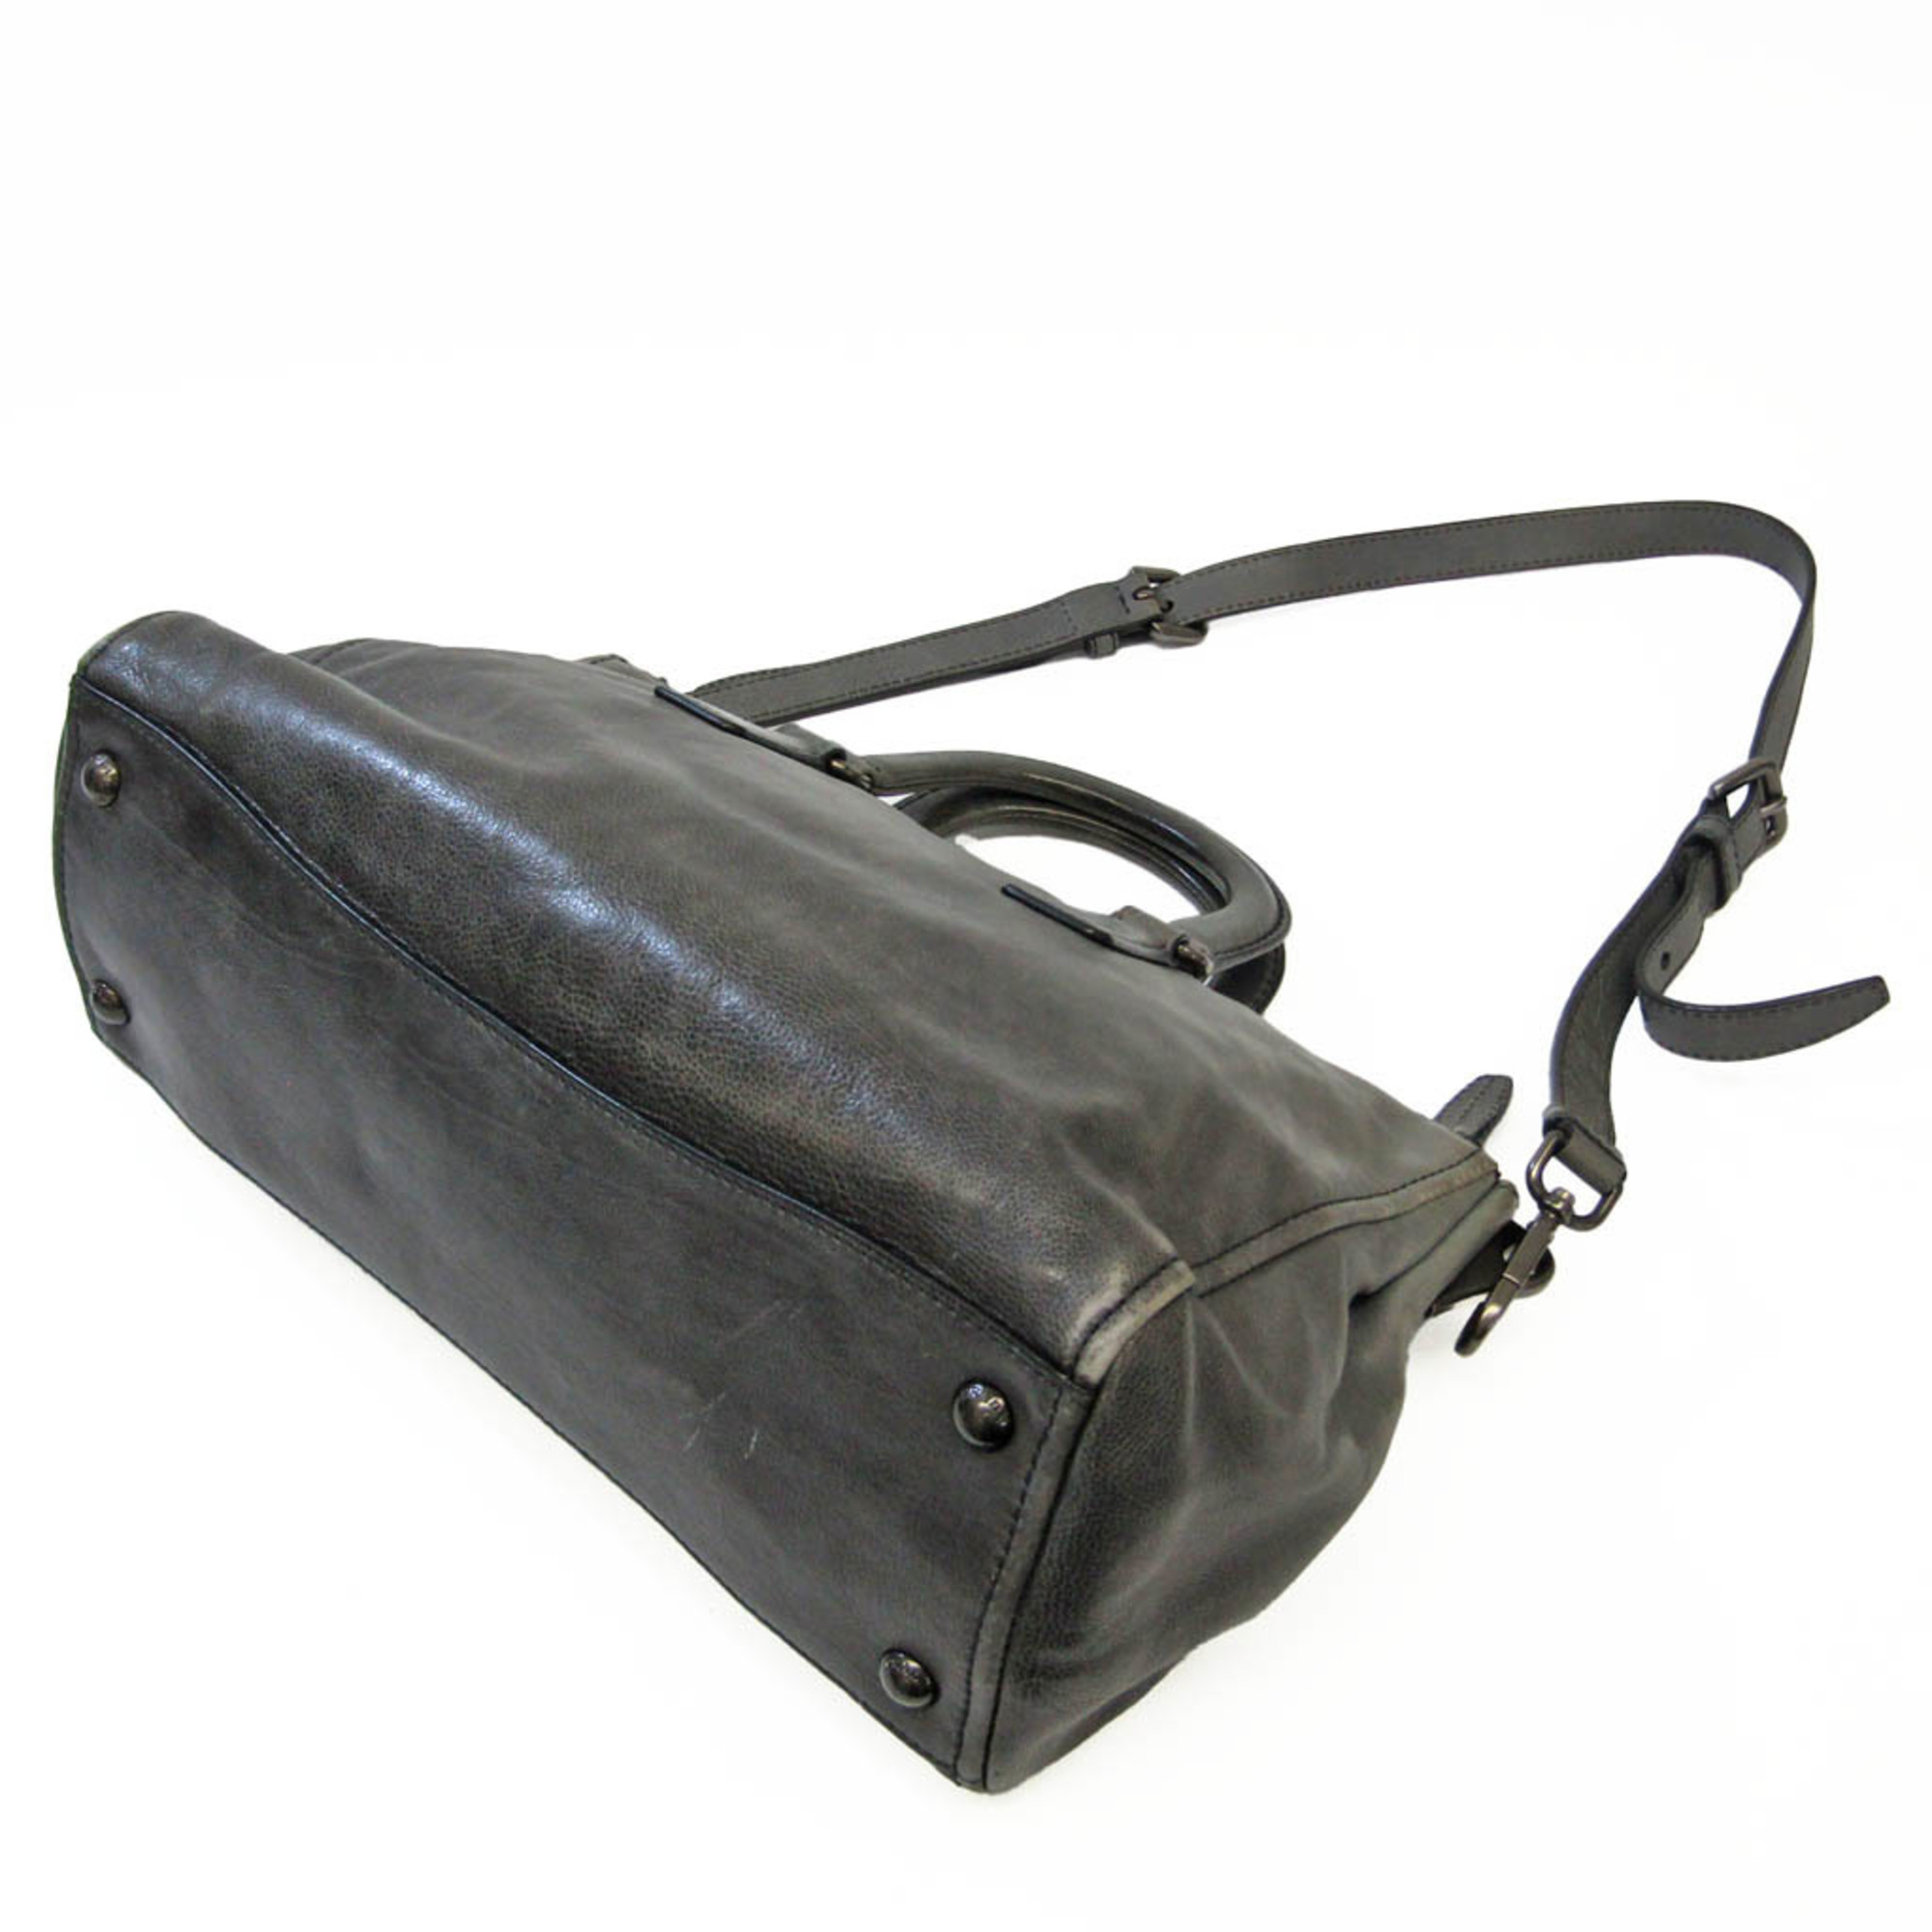 Prada BL0739 Women's Leather Handbag,Shoulder Bag Gray,Gray Navy